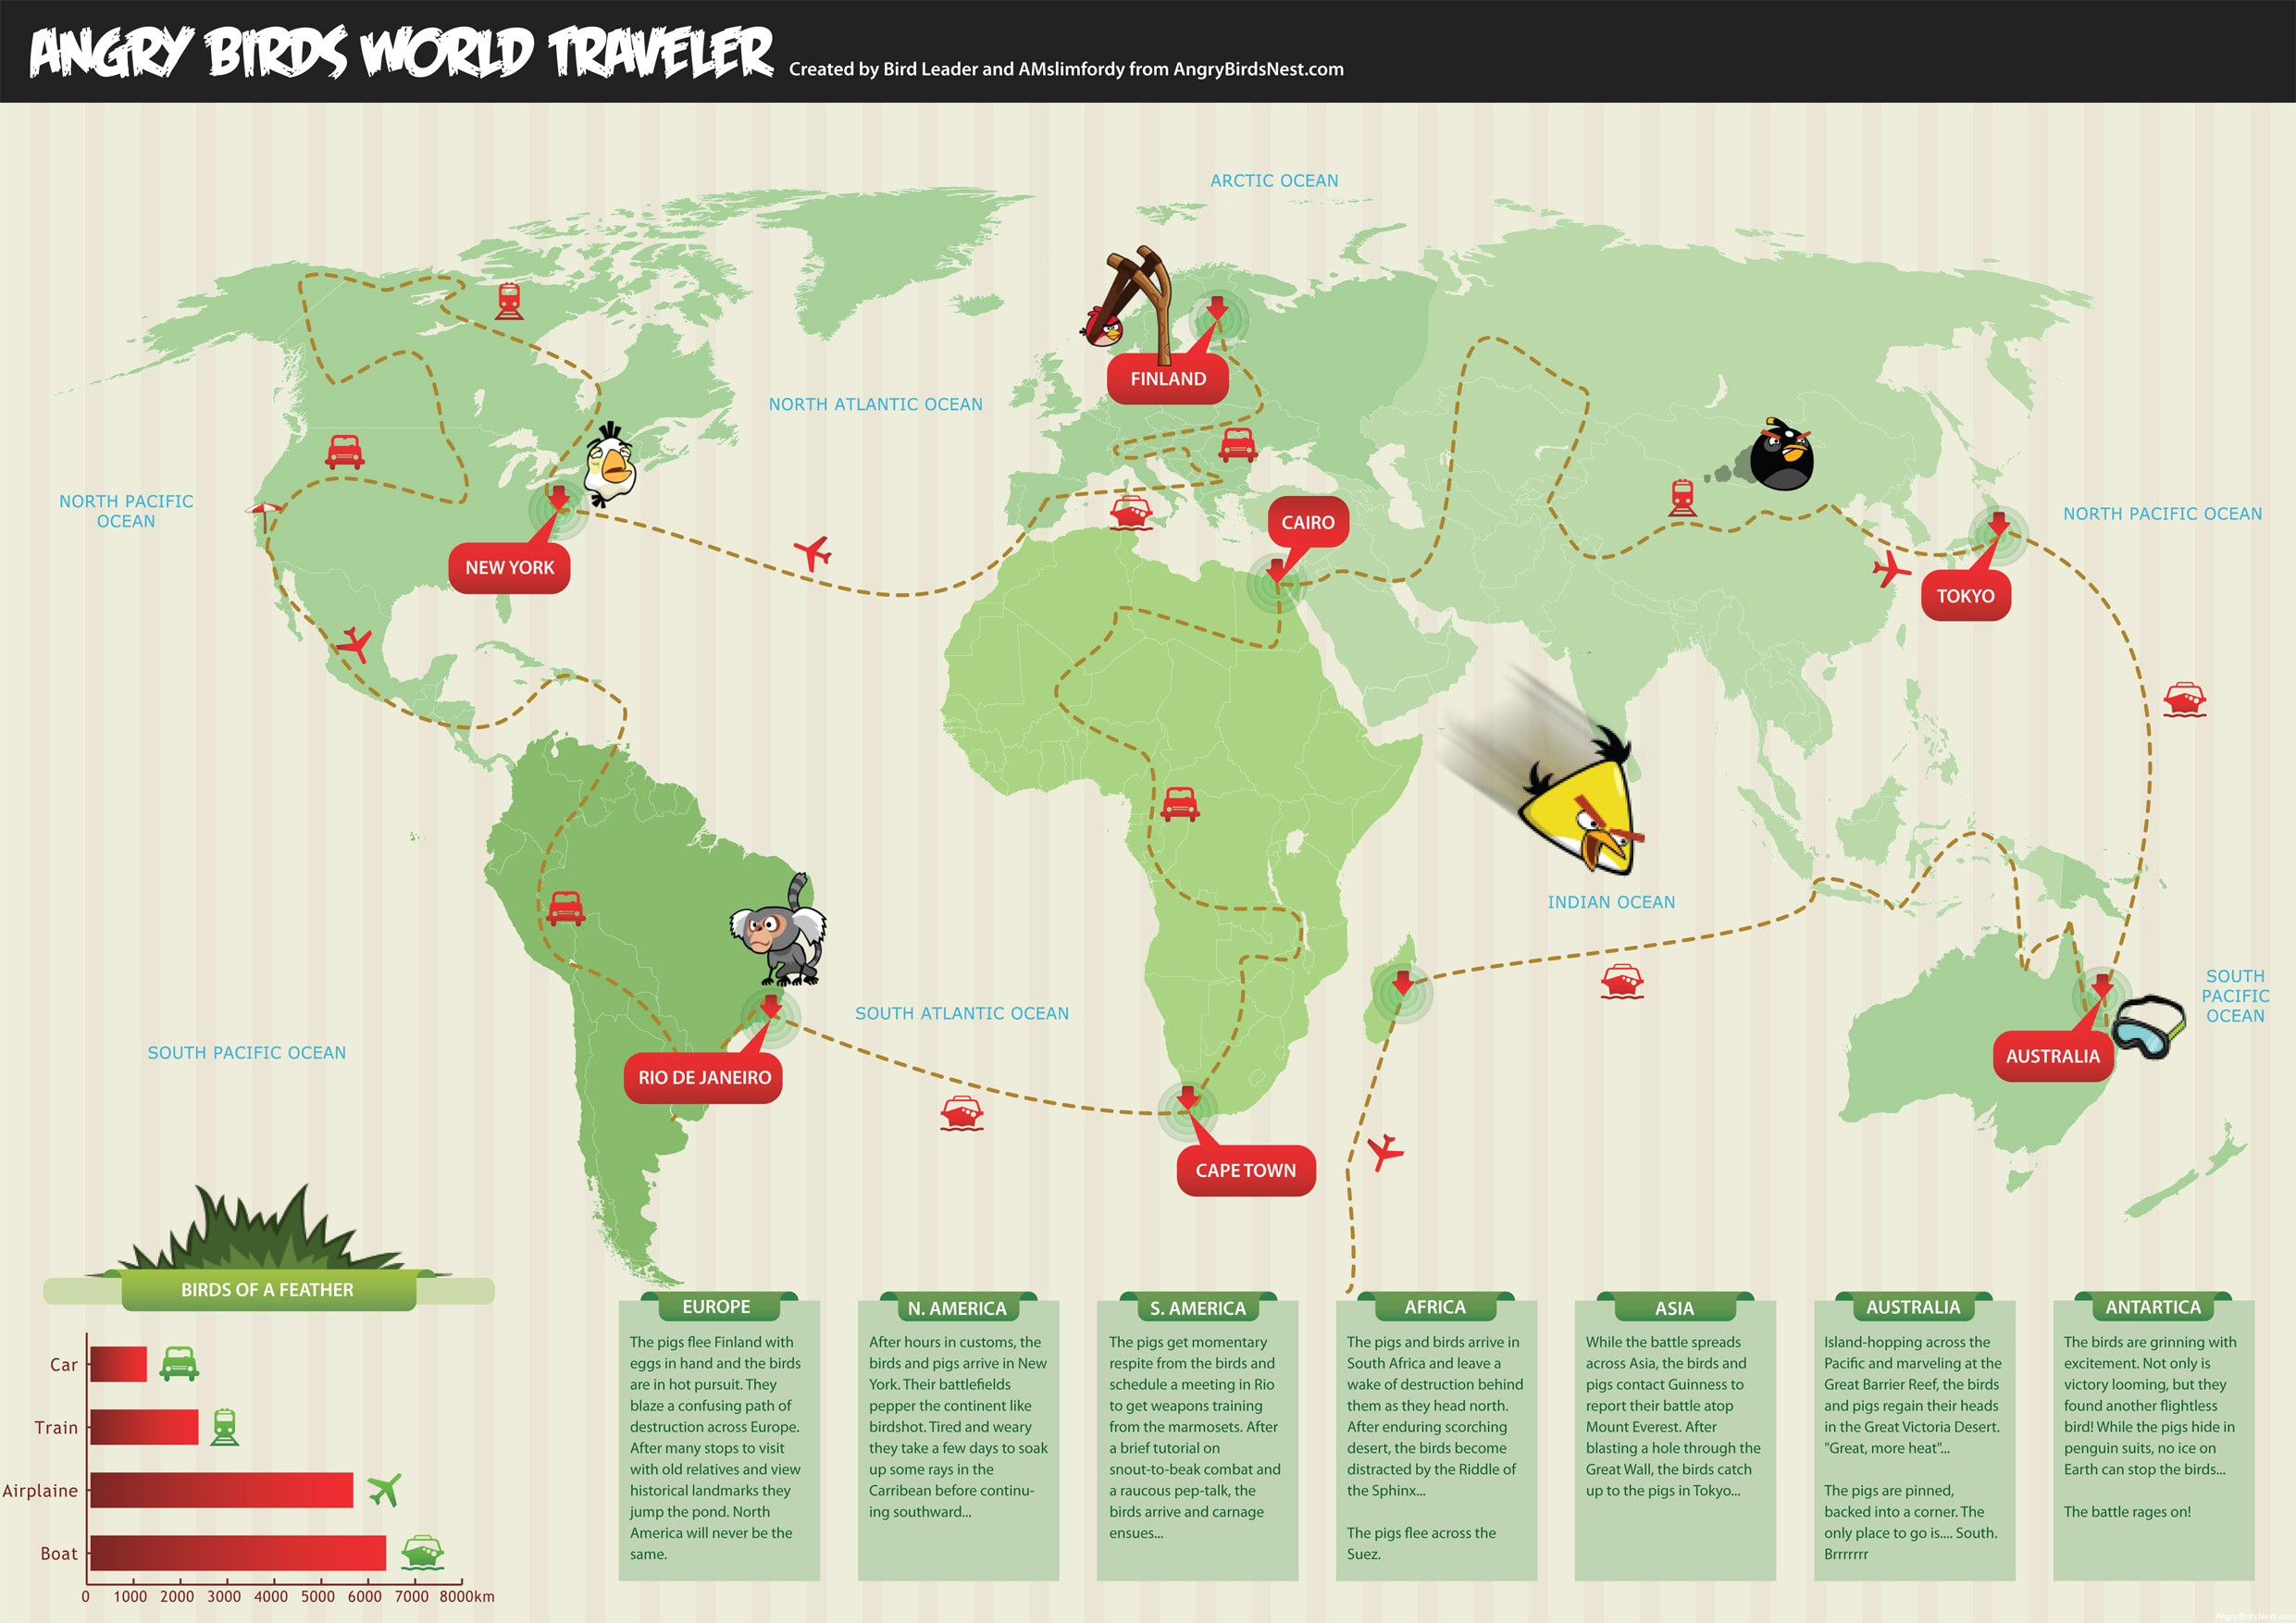 Angry Birds World traveller